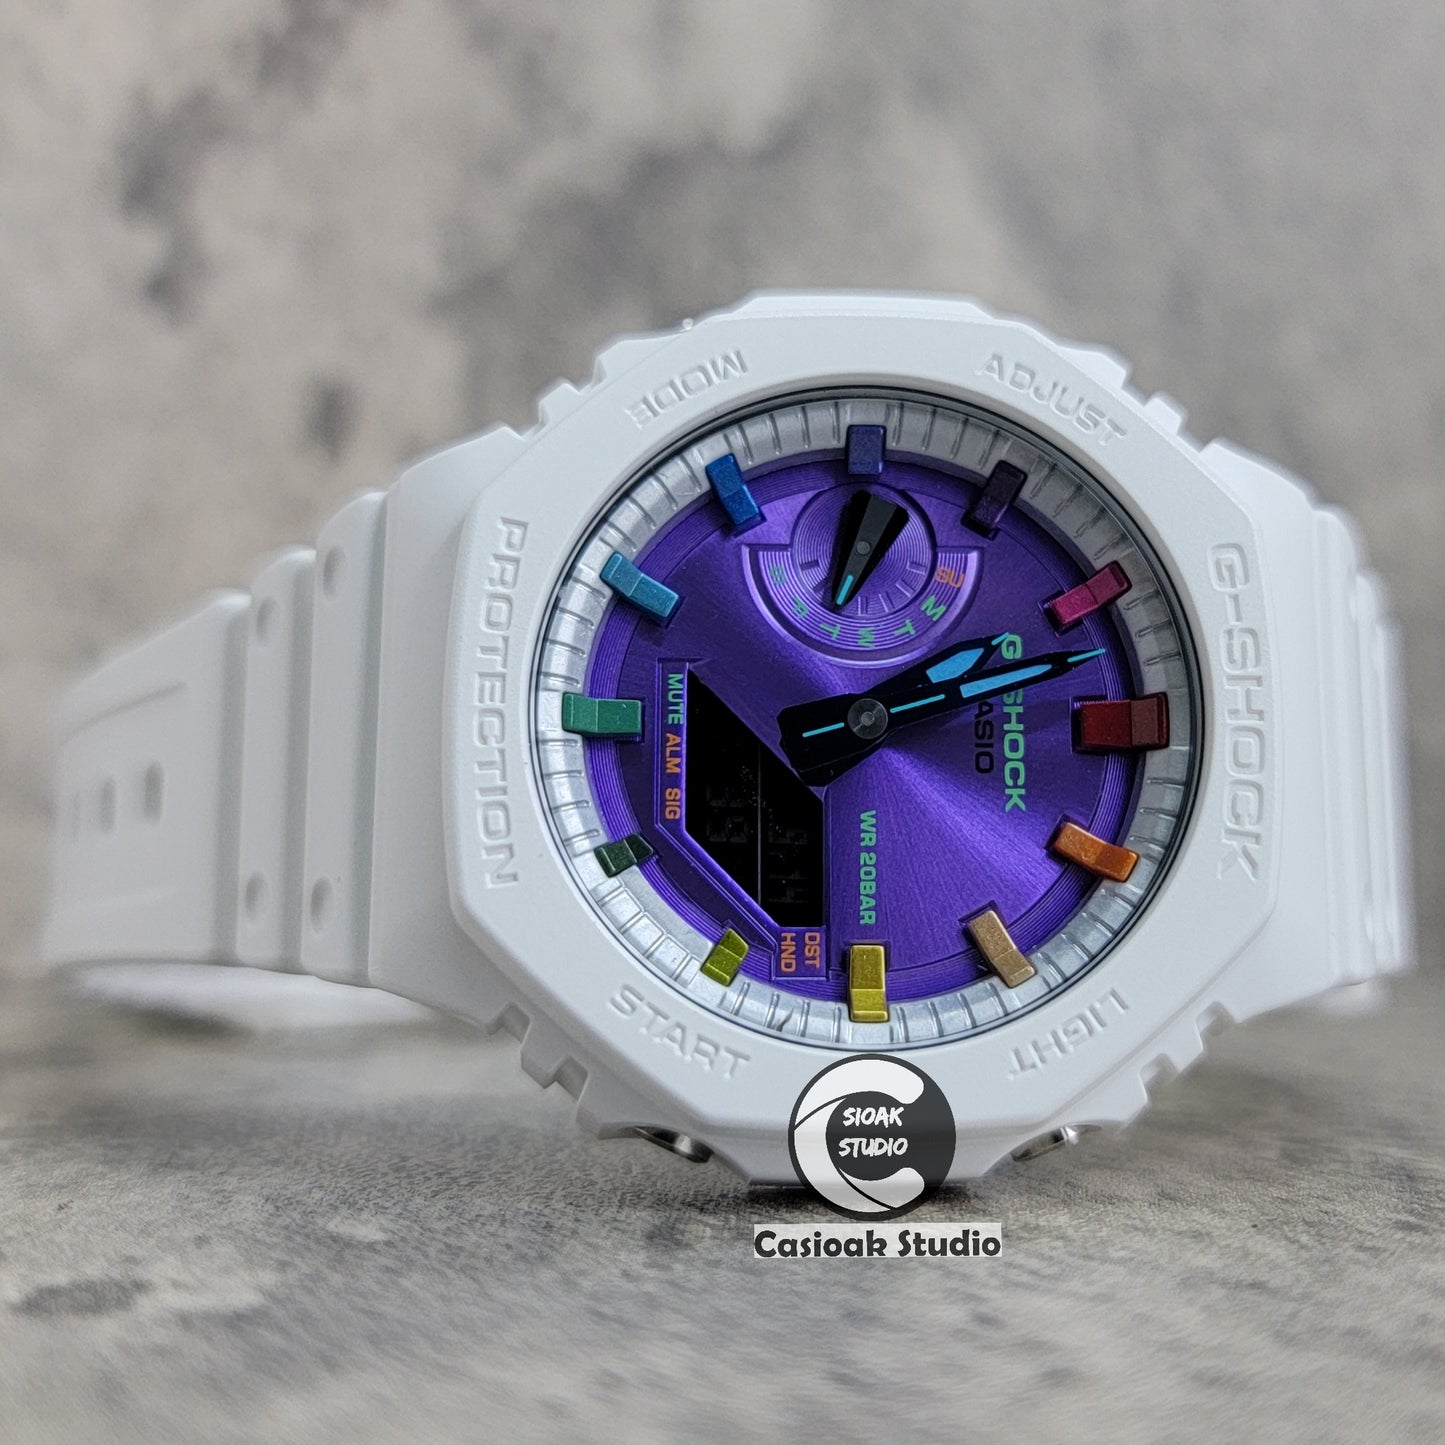 Casioak Mod Watch White Plastic Case Strap Silver Rainbow Time Mark Purple Dial 44mm - Casioak Studio